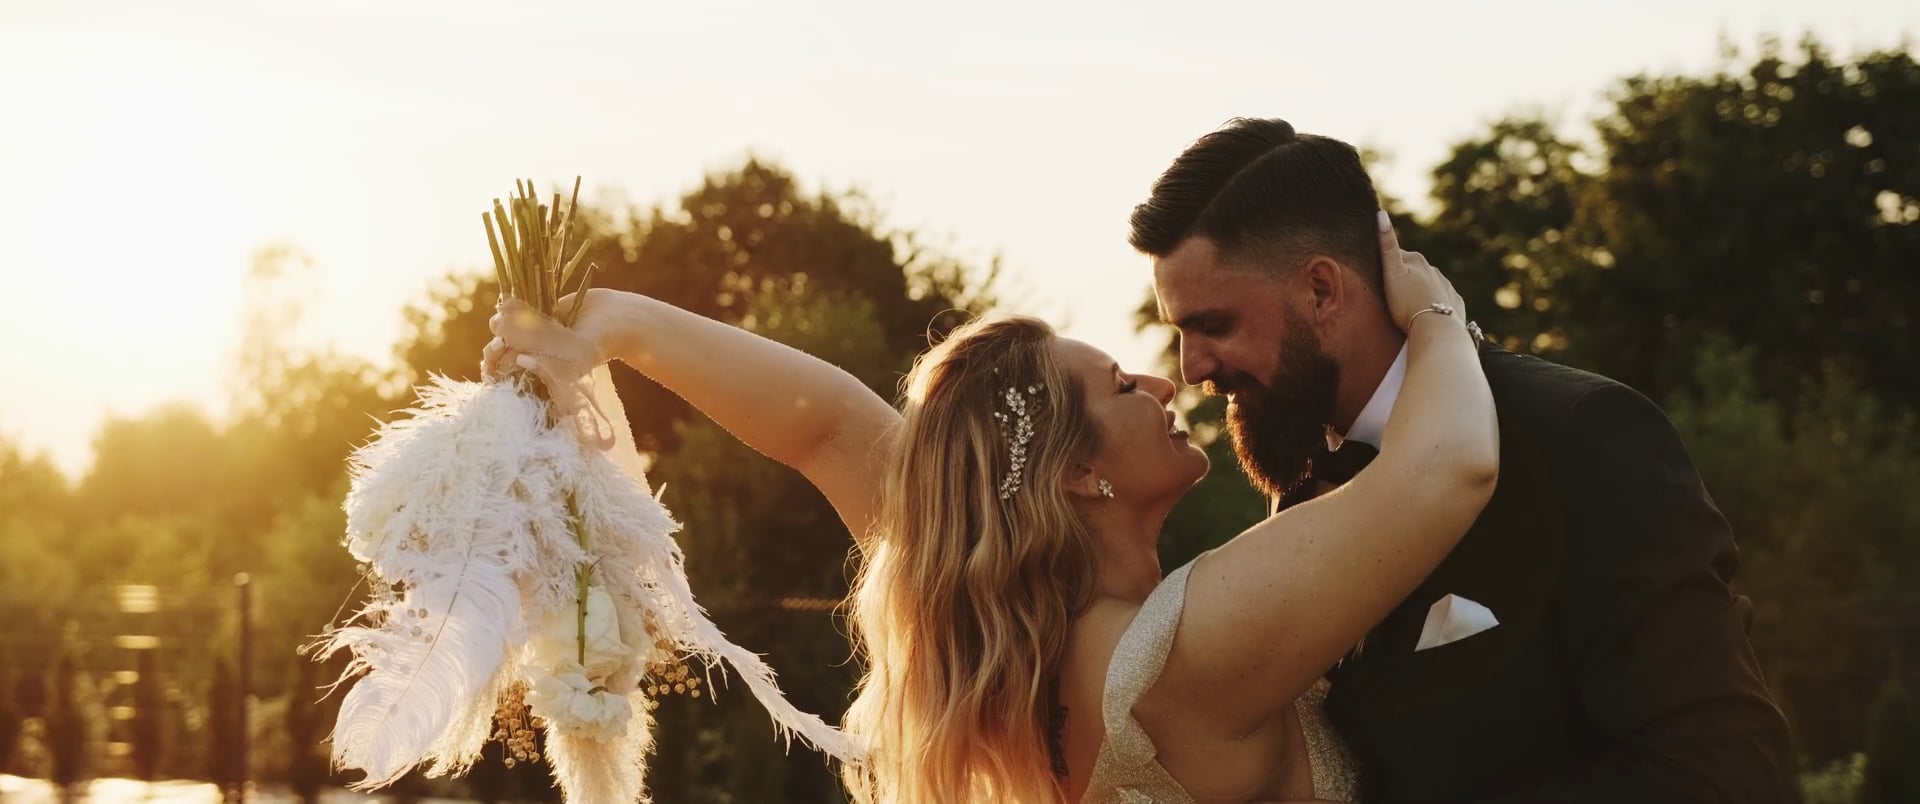 Ania & Michał Wedding Highlights